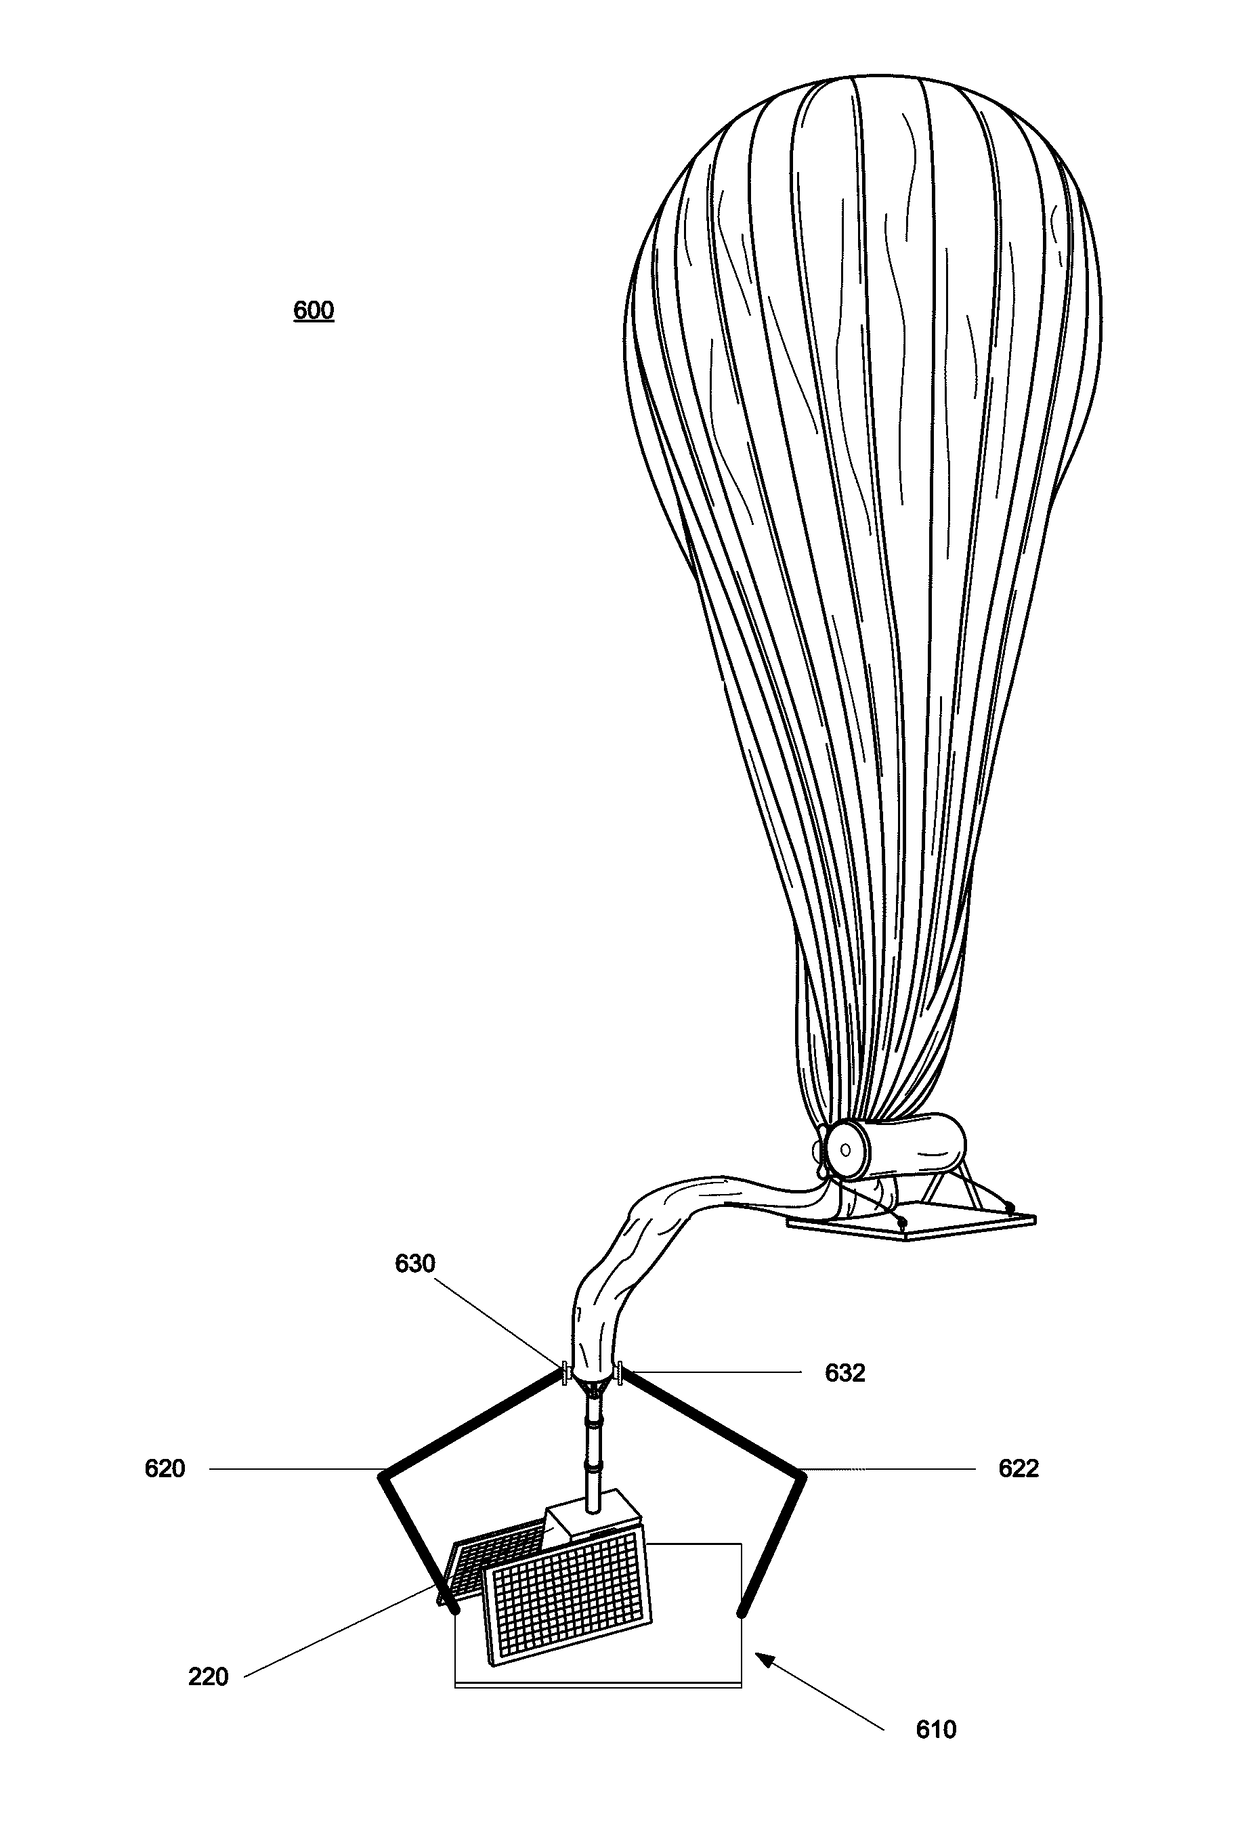 Balloon launching apparatuses